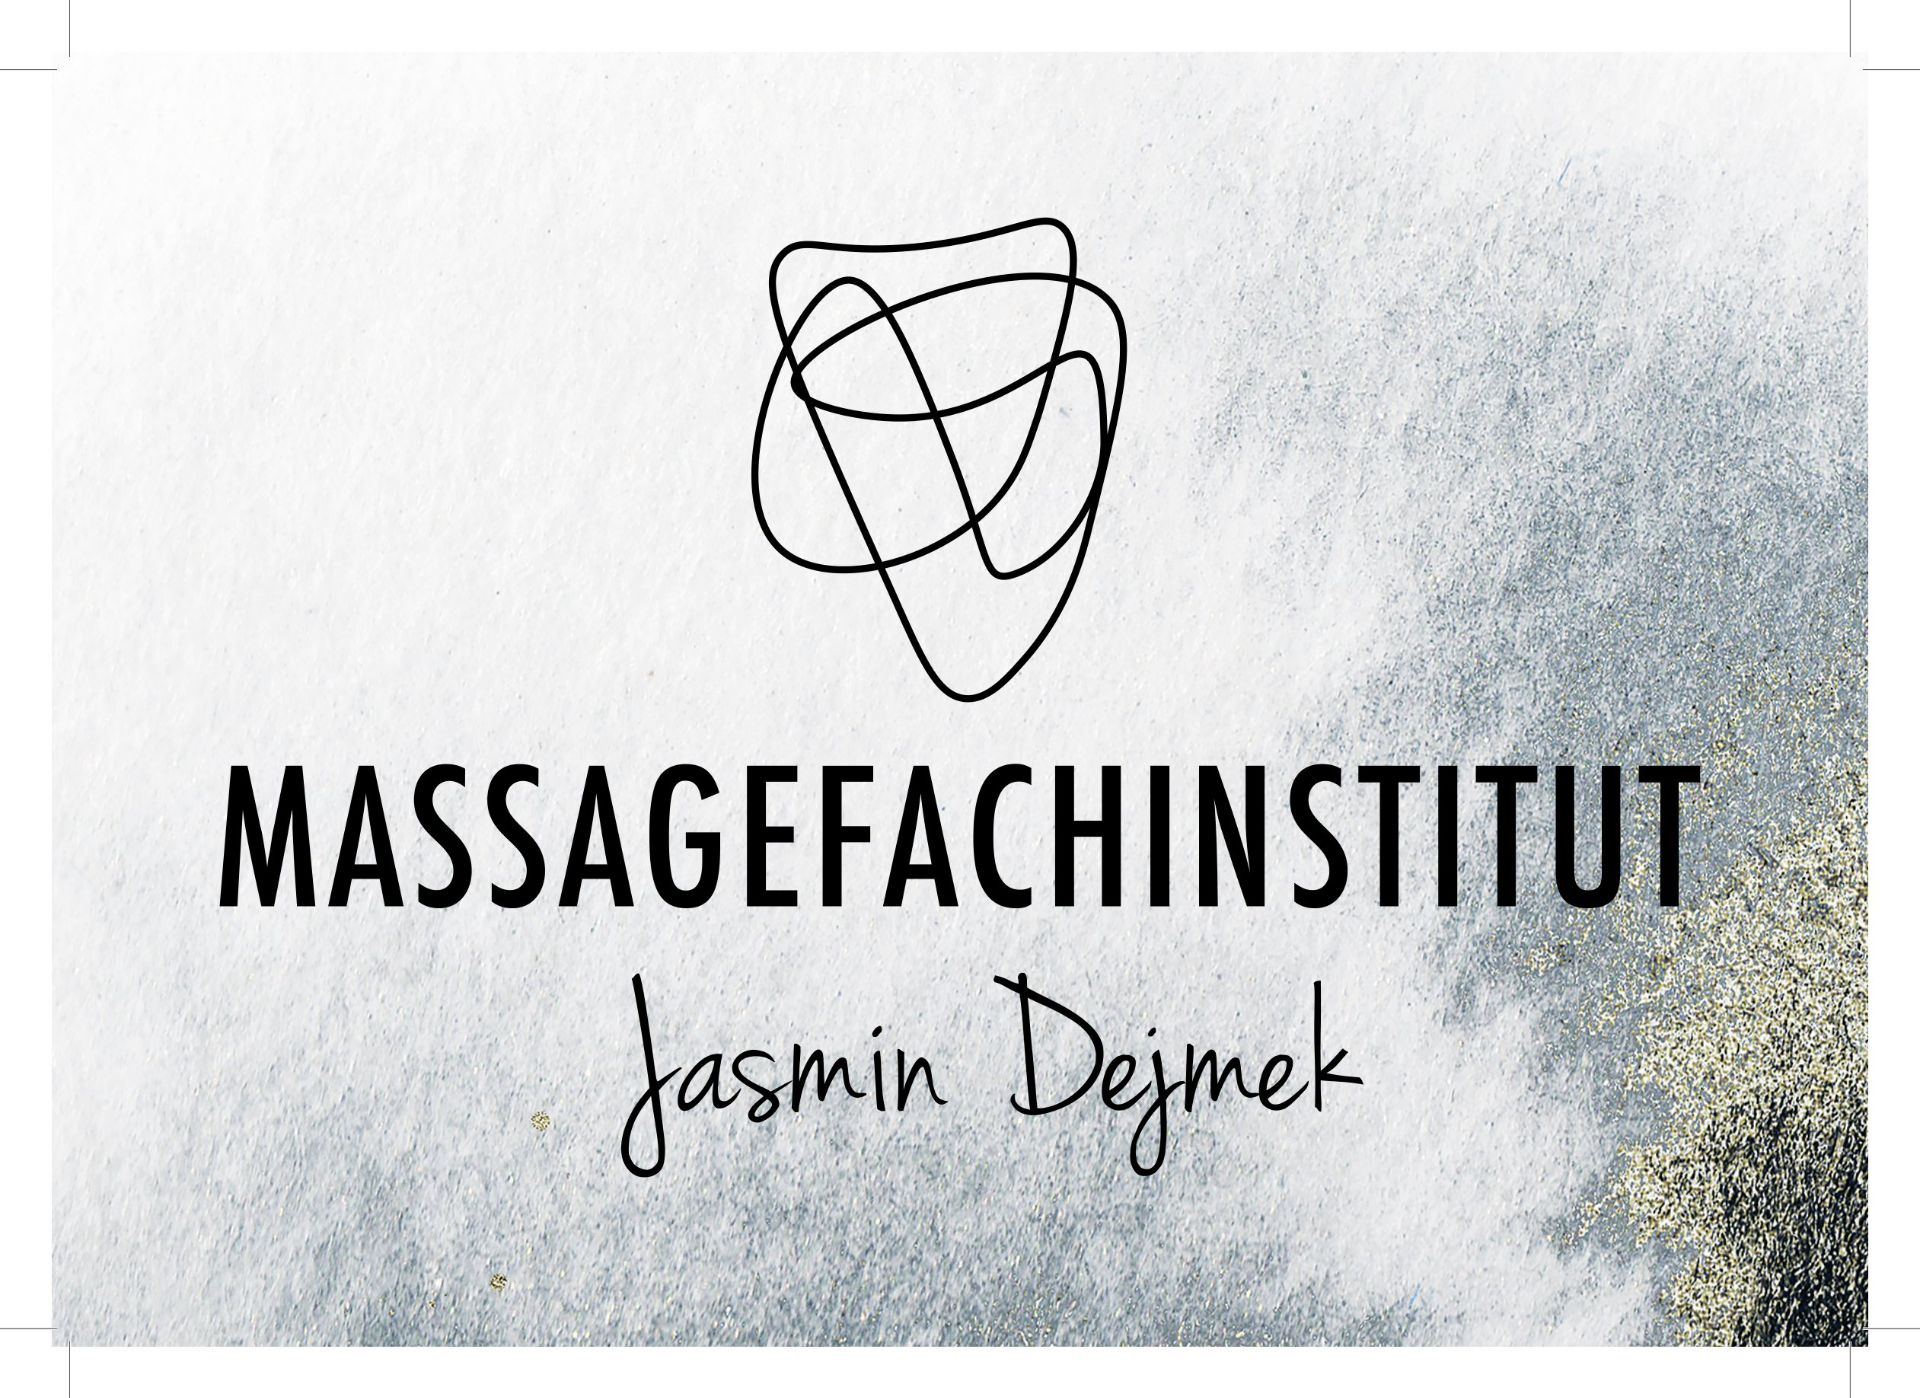 Massagefachinstitut Jasmin Dejmek